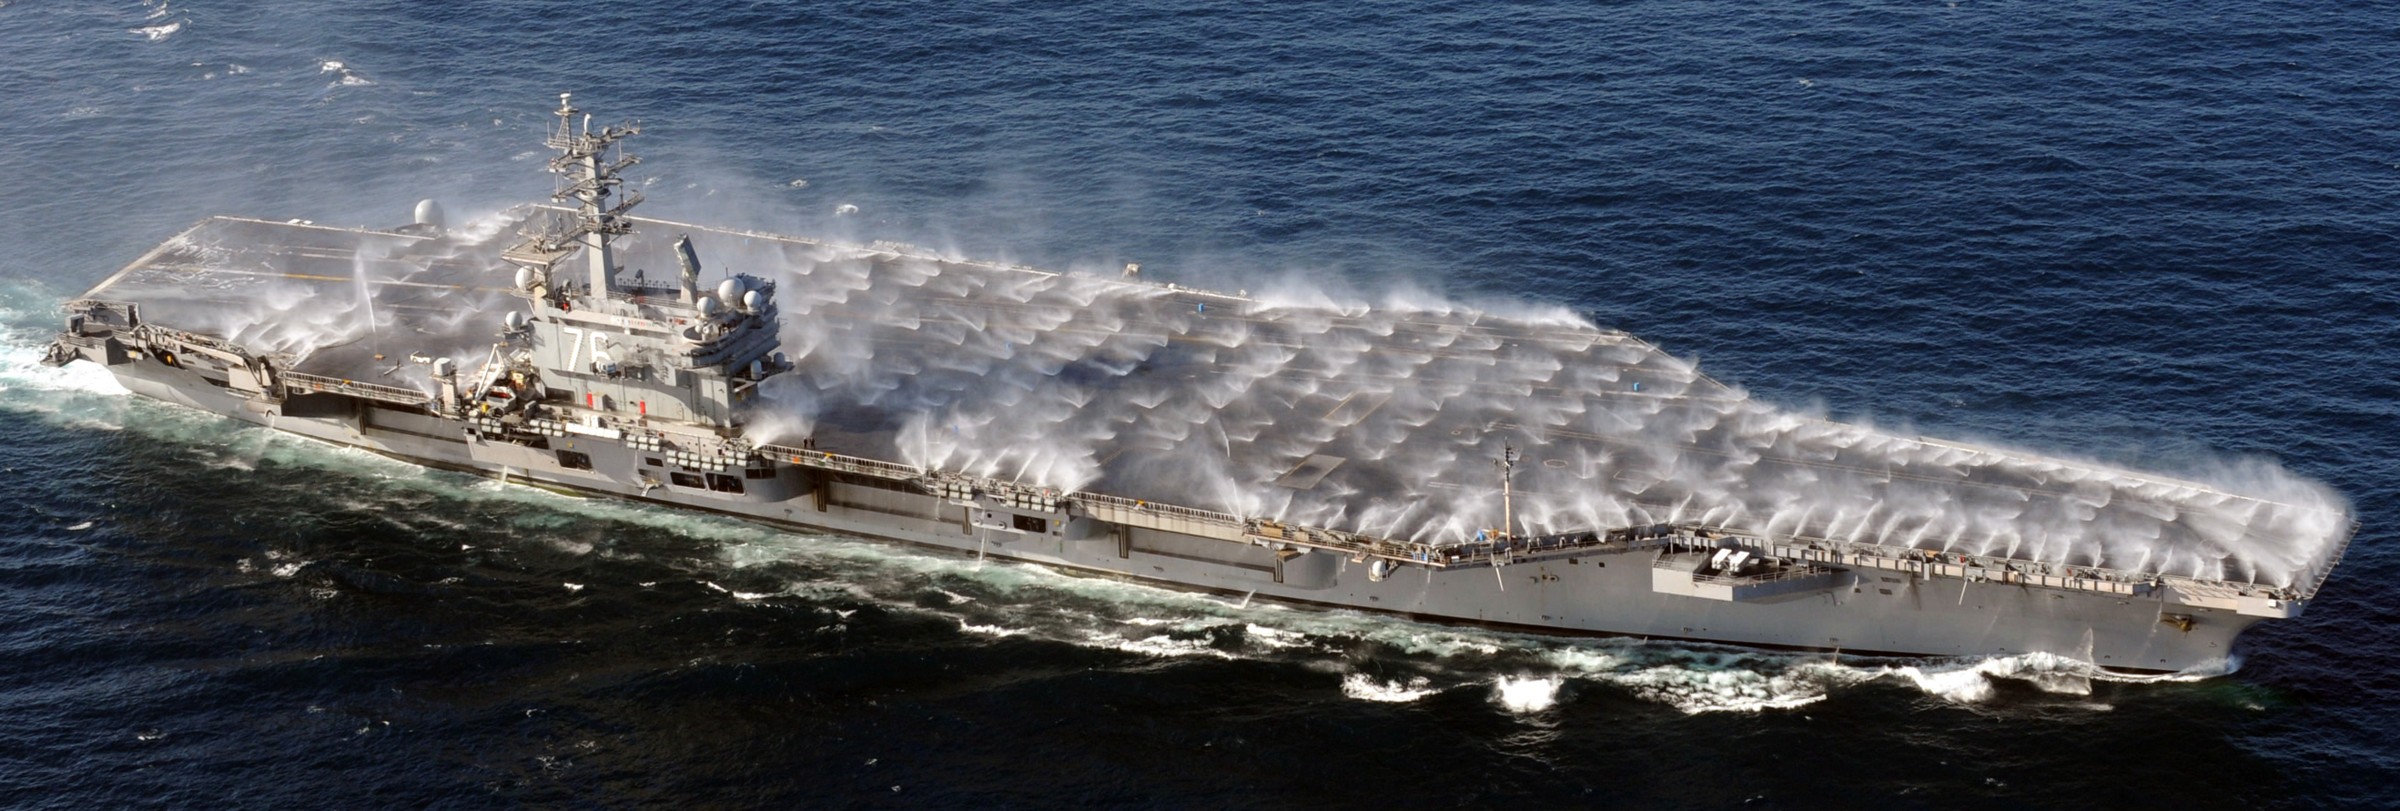 cvn-76 uss ronald reagan aircraft carrier countermeasure washdown sprinkler tests 2008 38